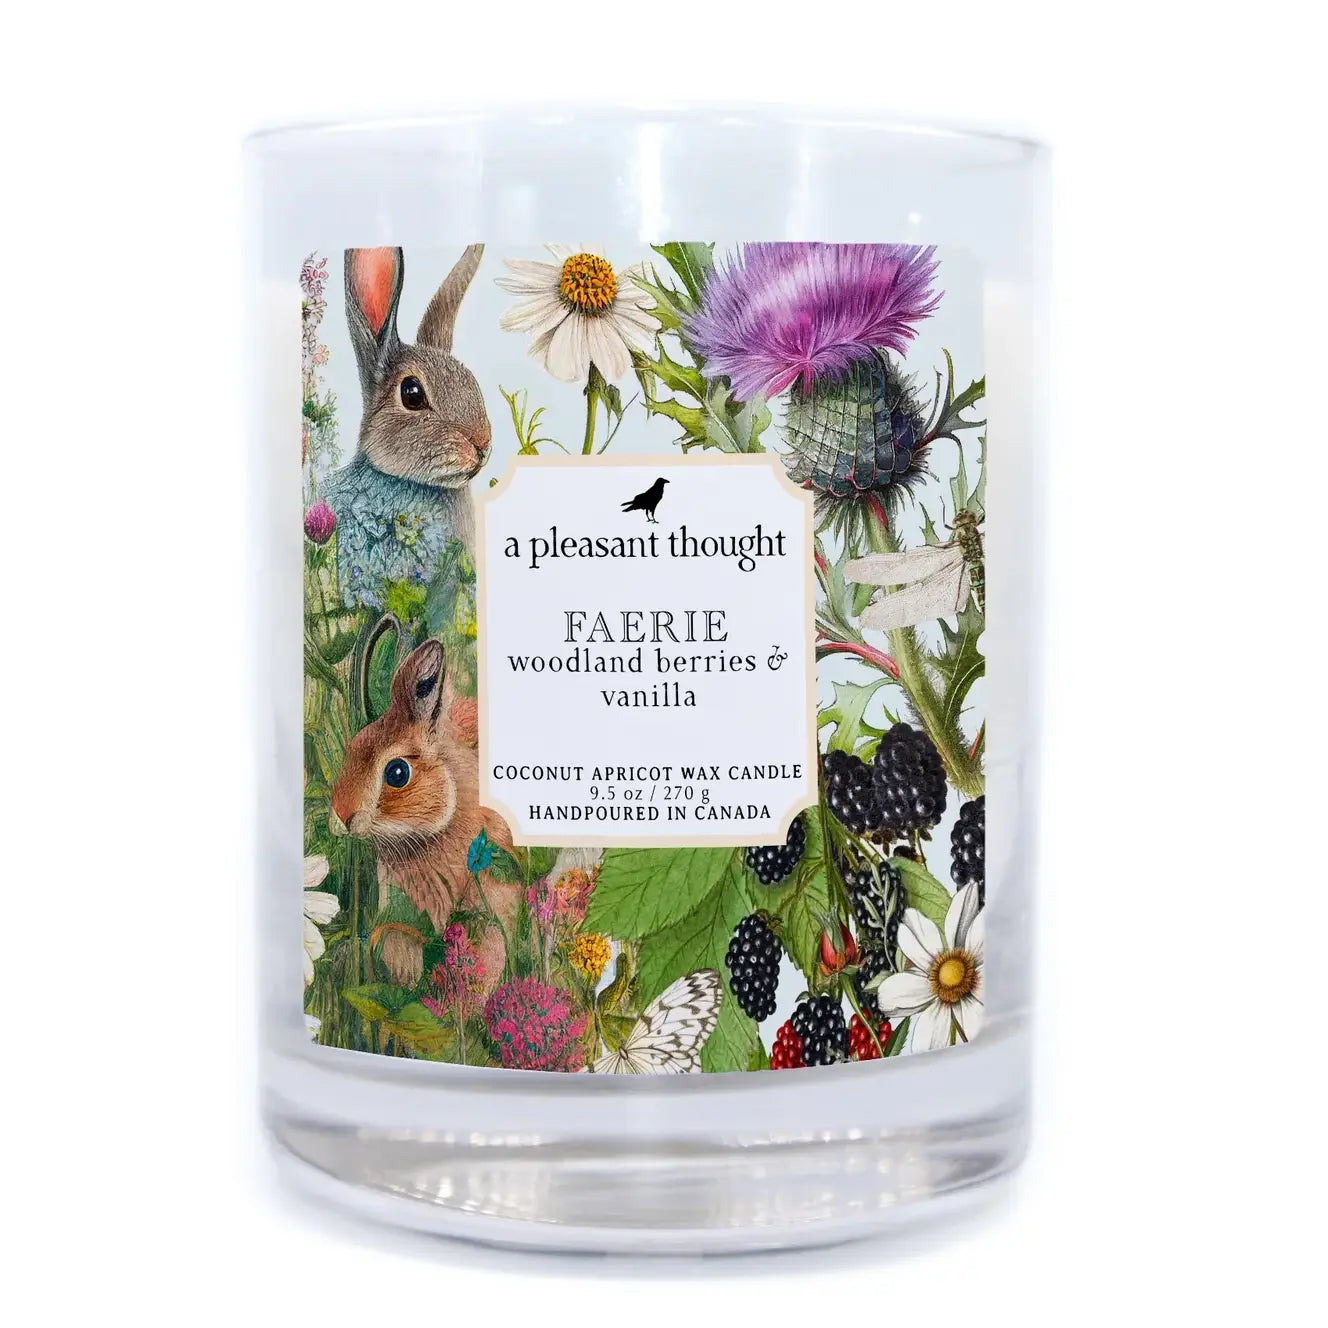 Faerie-Woodland Berries & Vanilla 15 oz. Candle